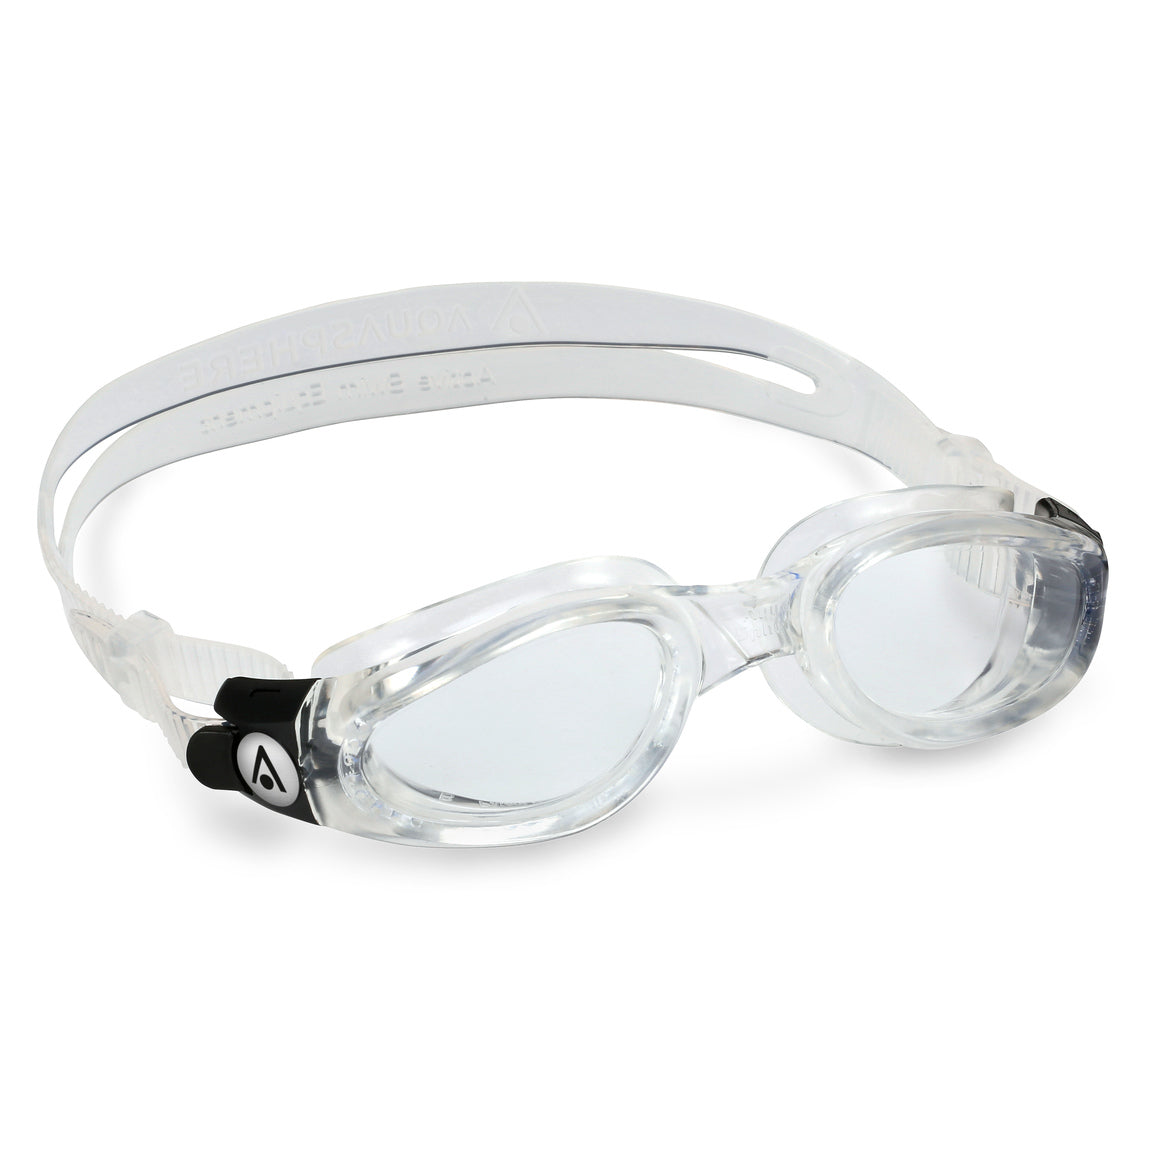 Aquasphere Adult Goggles Kaiman Clear